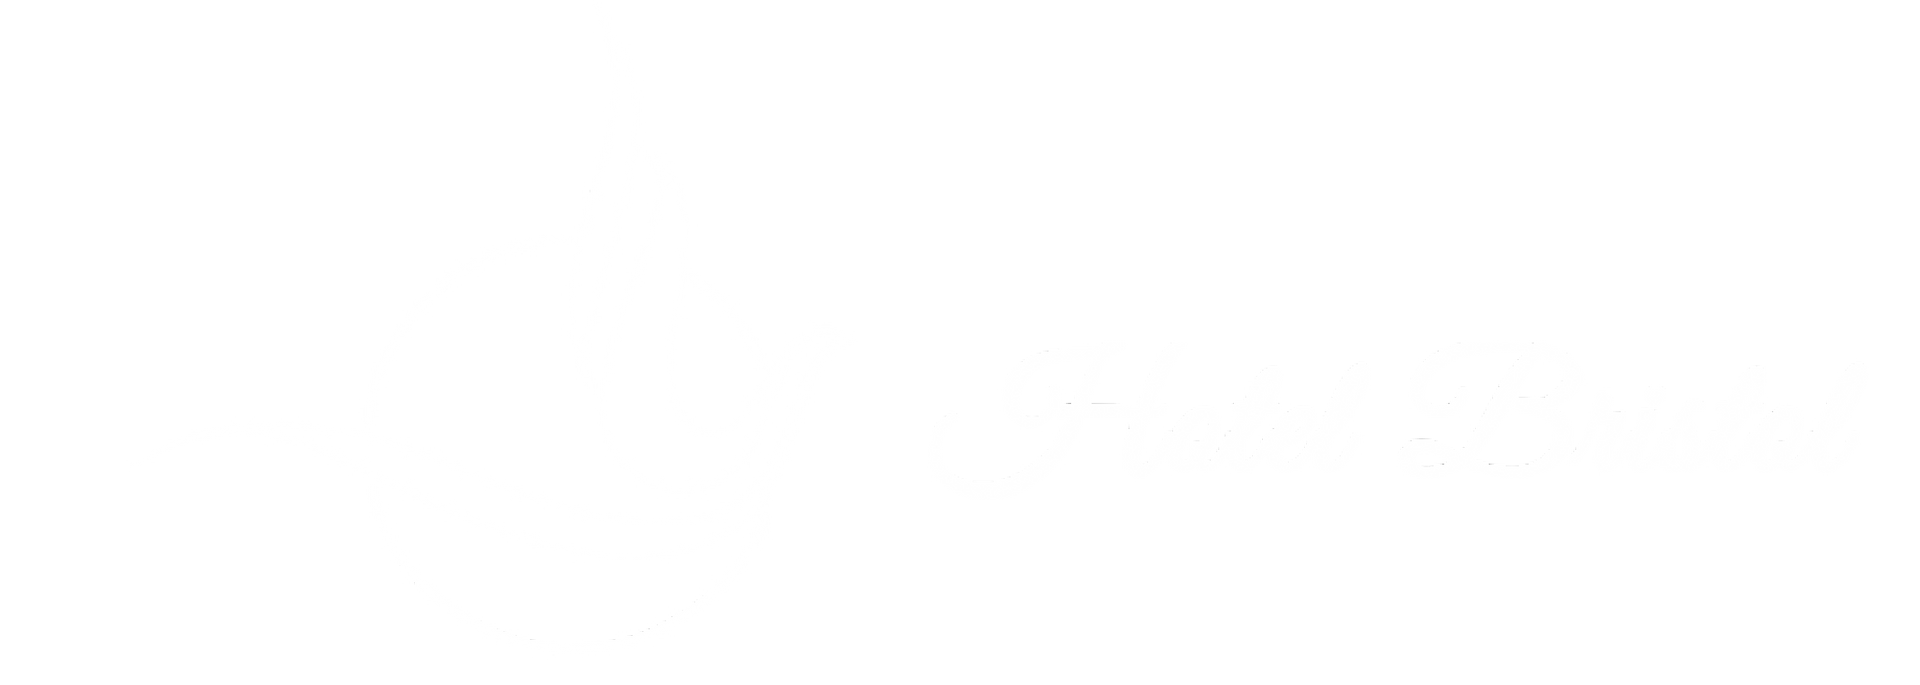 Bristol Hotel, Logo